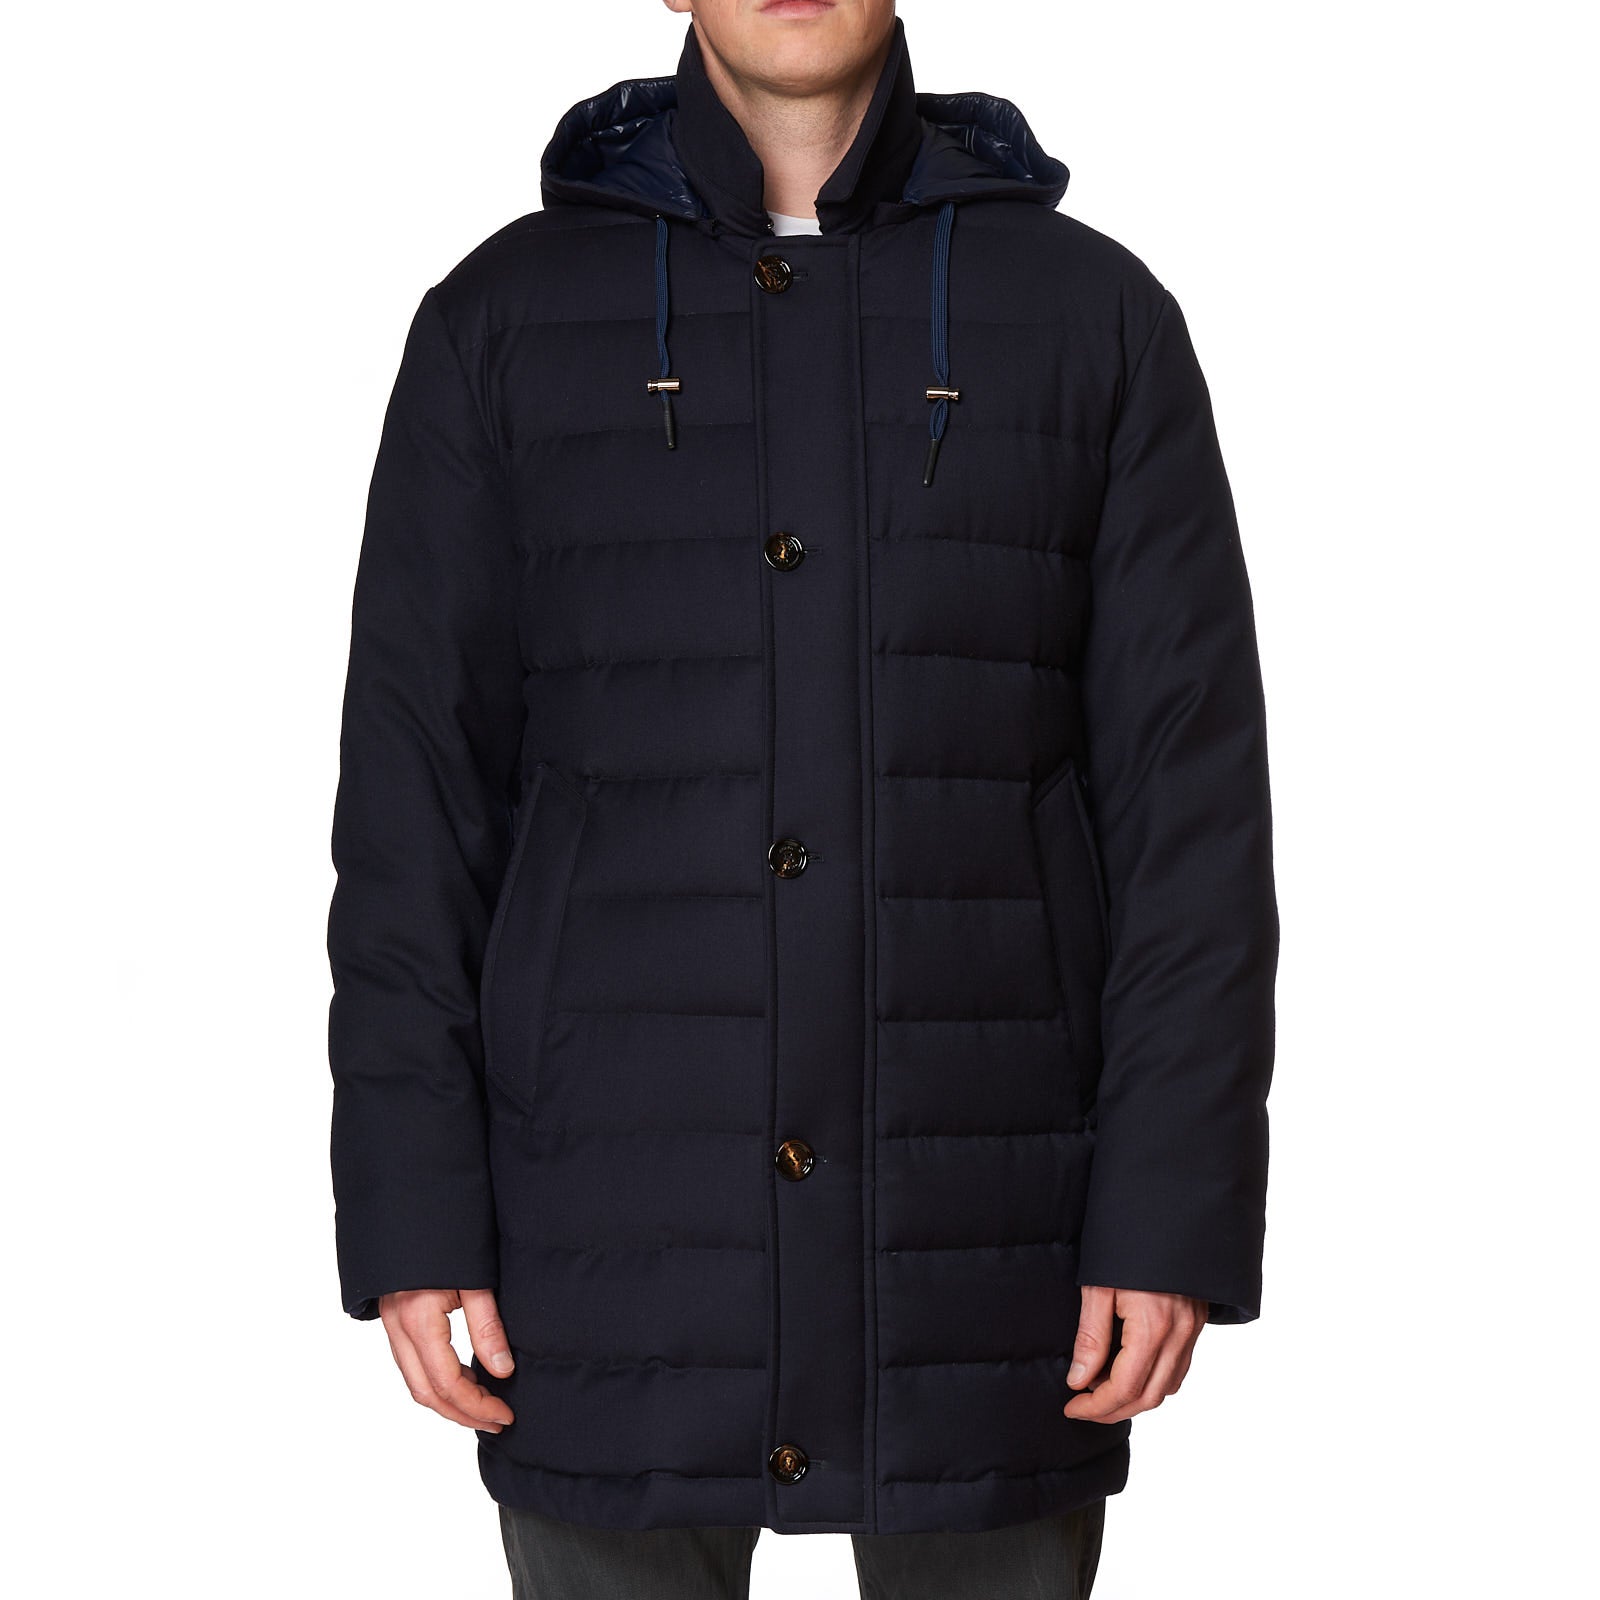 KITON KIRED "Fayal" Wool-Cashmere Goose Down Hooded Parka Jacket Coat 56 2XL KIRED